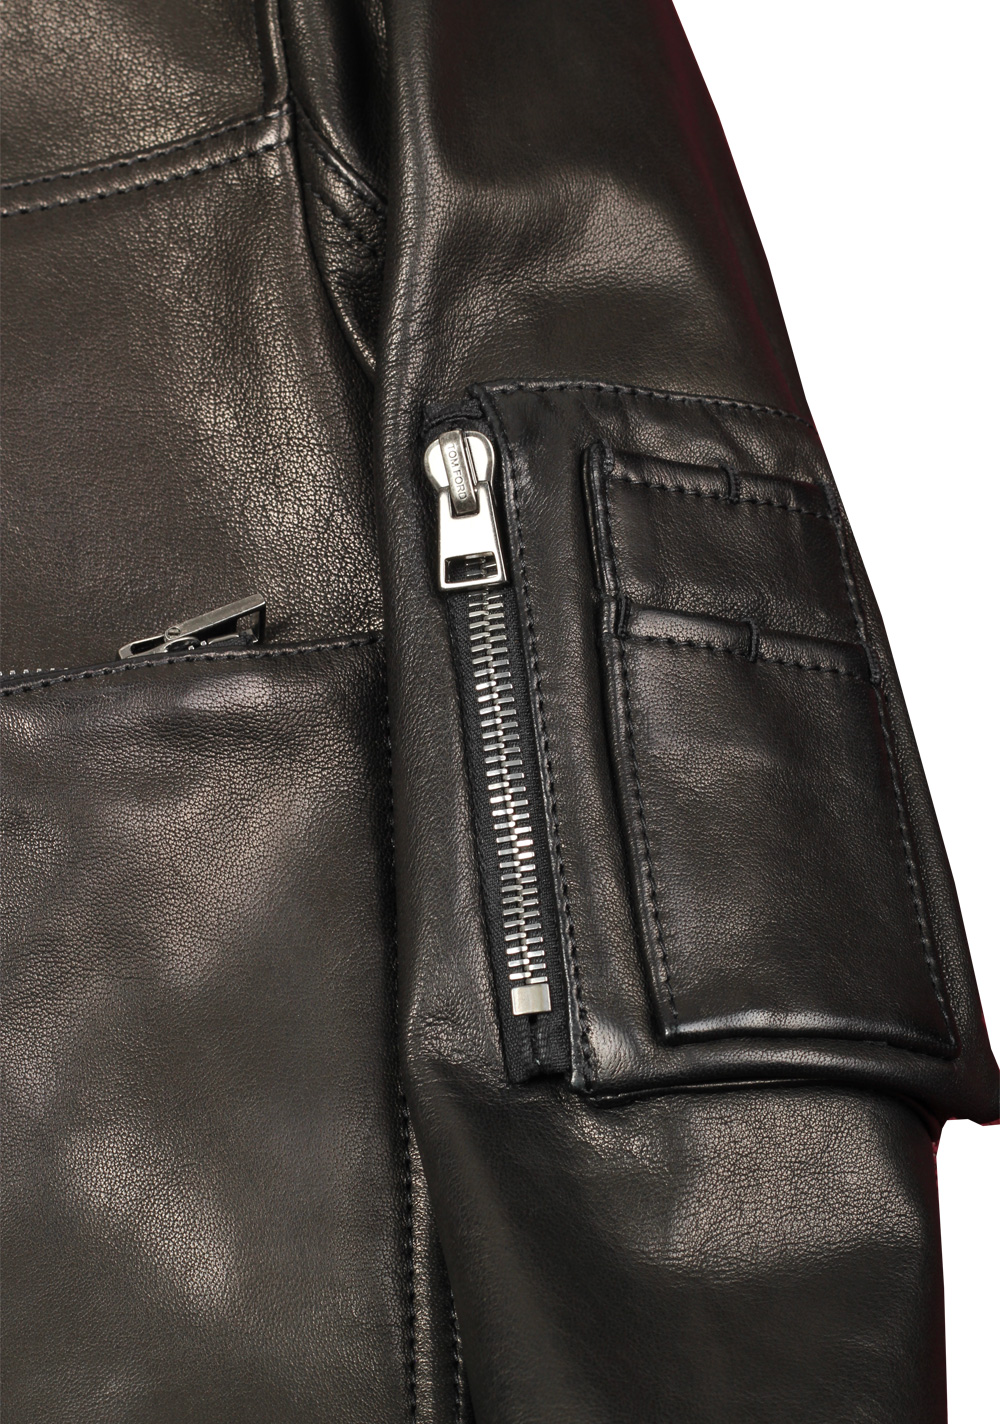 TOM FORD Black Leather Biker Coat Jacket Size 50 / 40R U.S. Outerwear ...